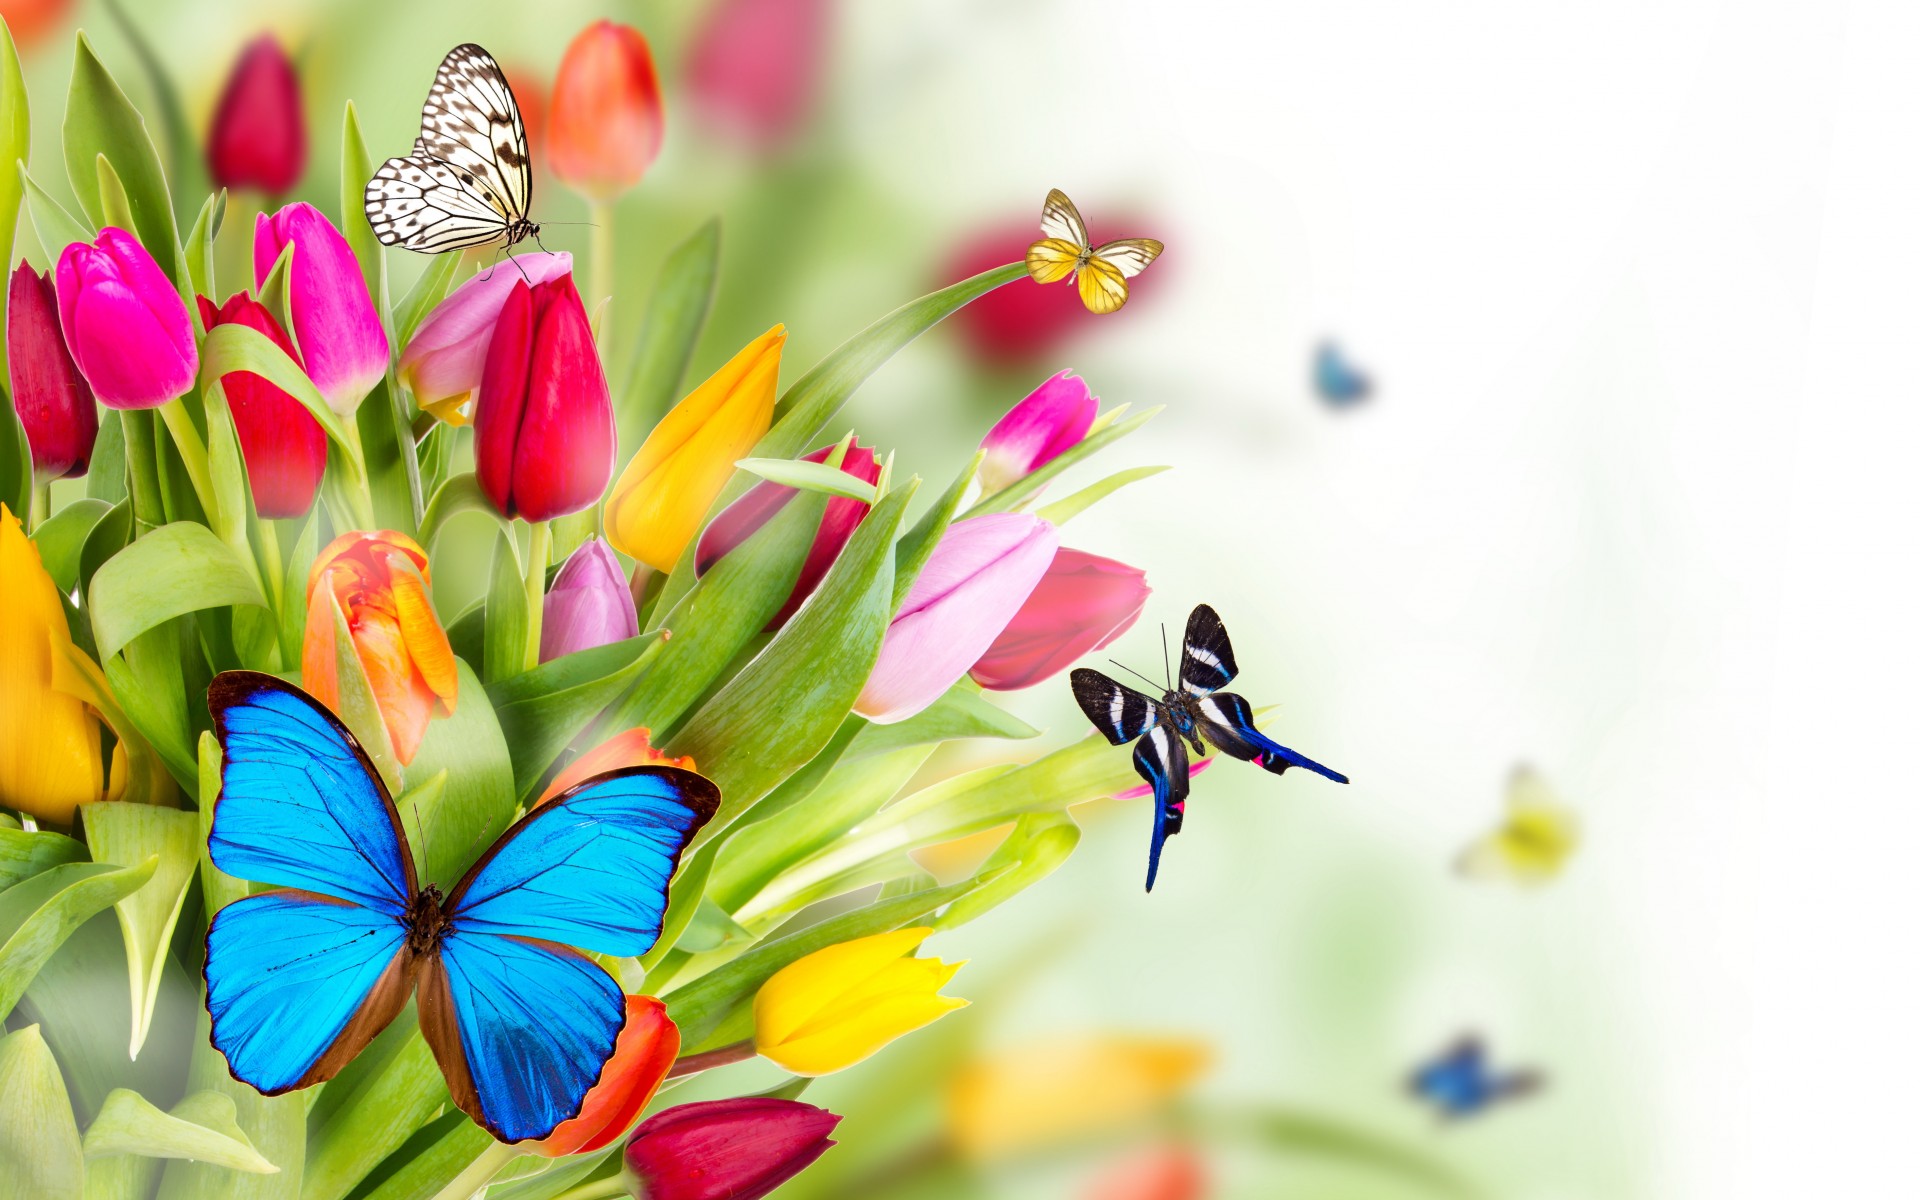 Spring Flowers Image Wallpaper